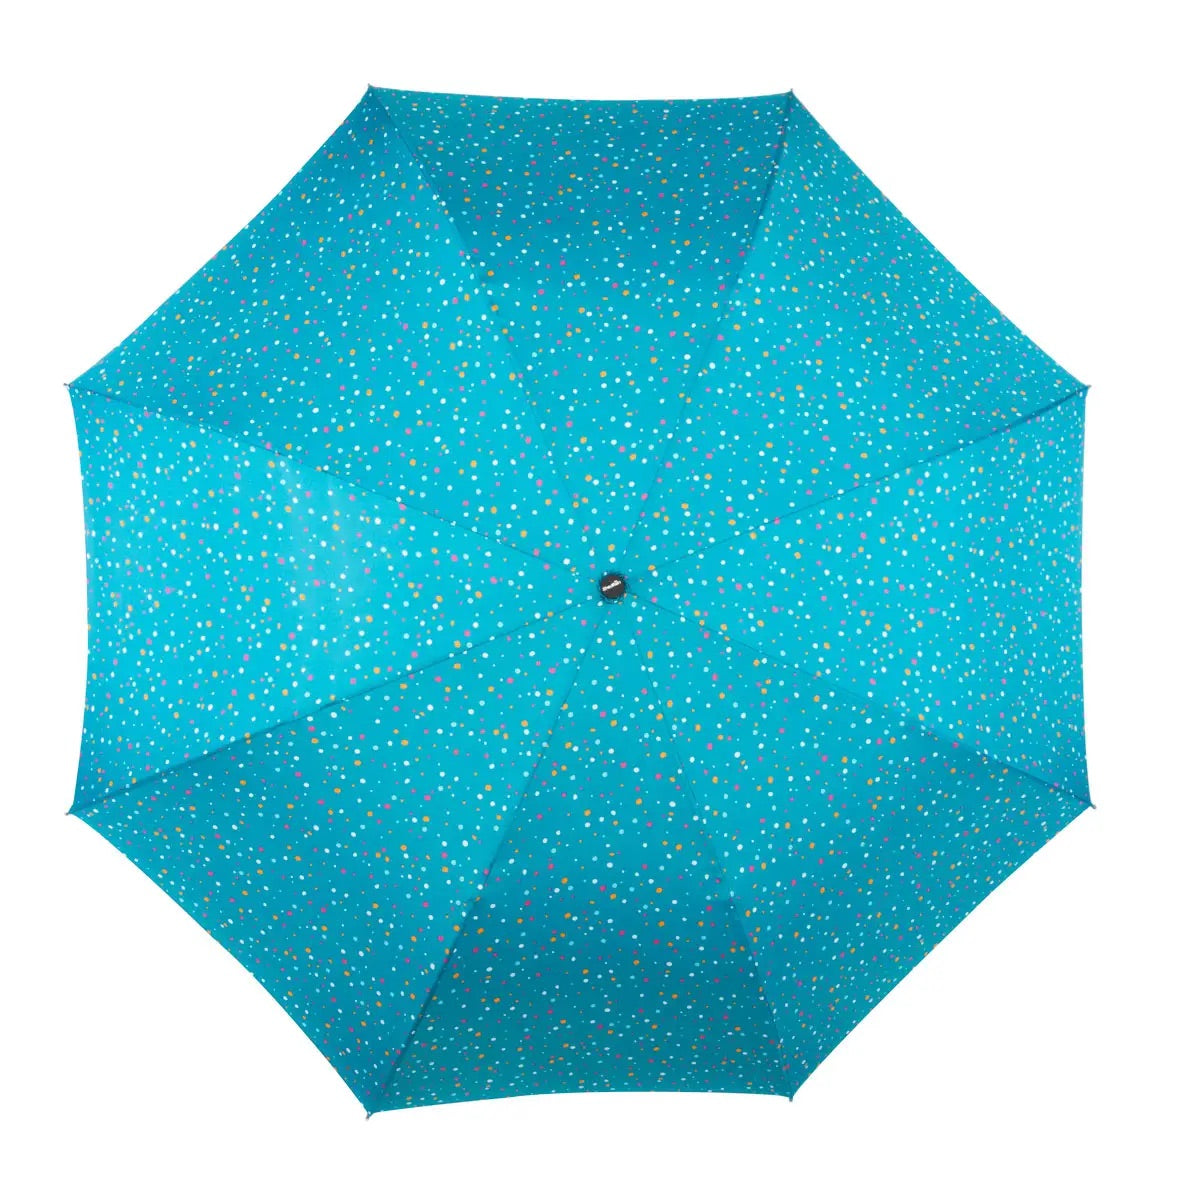 Blue Dot/Floral Reverse Closing Umbrella